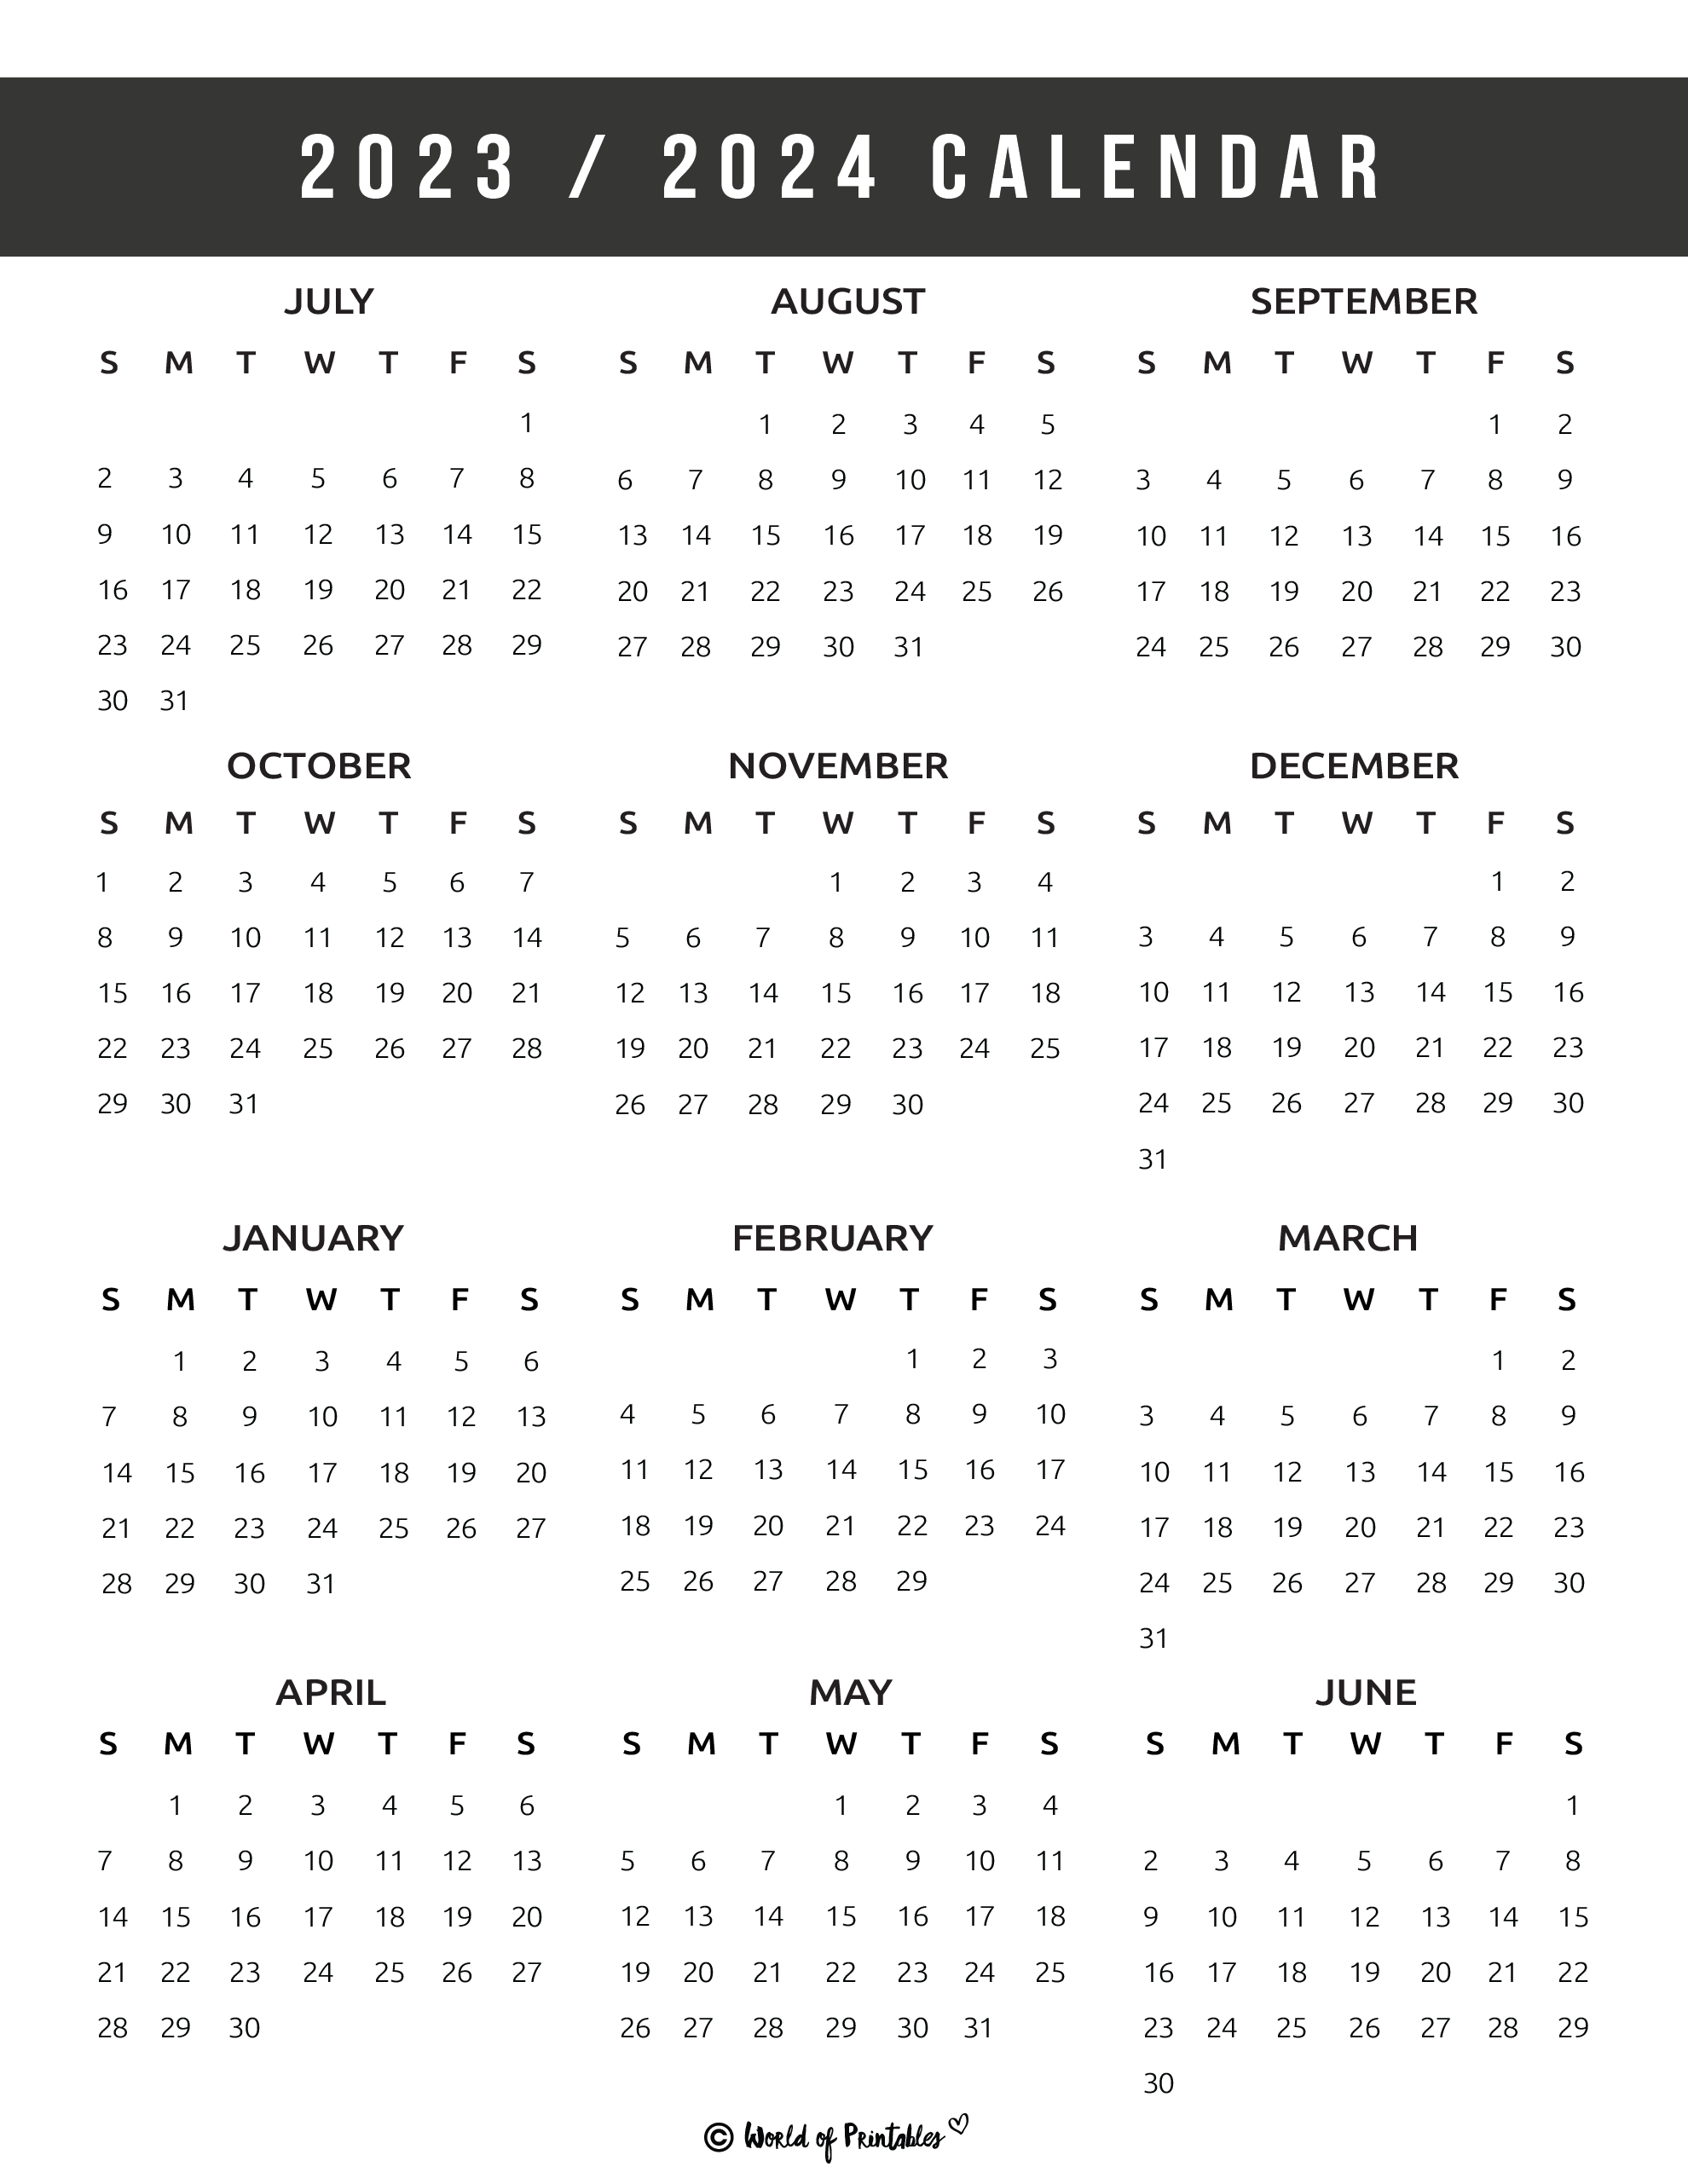 2023 2024 Calendar Free Printables - World Of Printables for Free Printable Calendar August 2023-May 2024